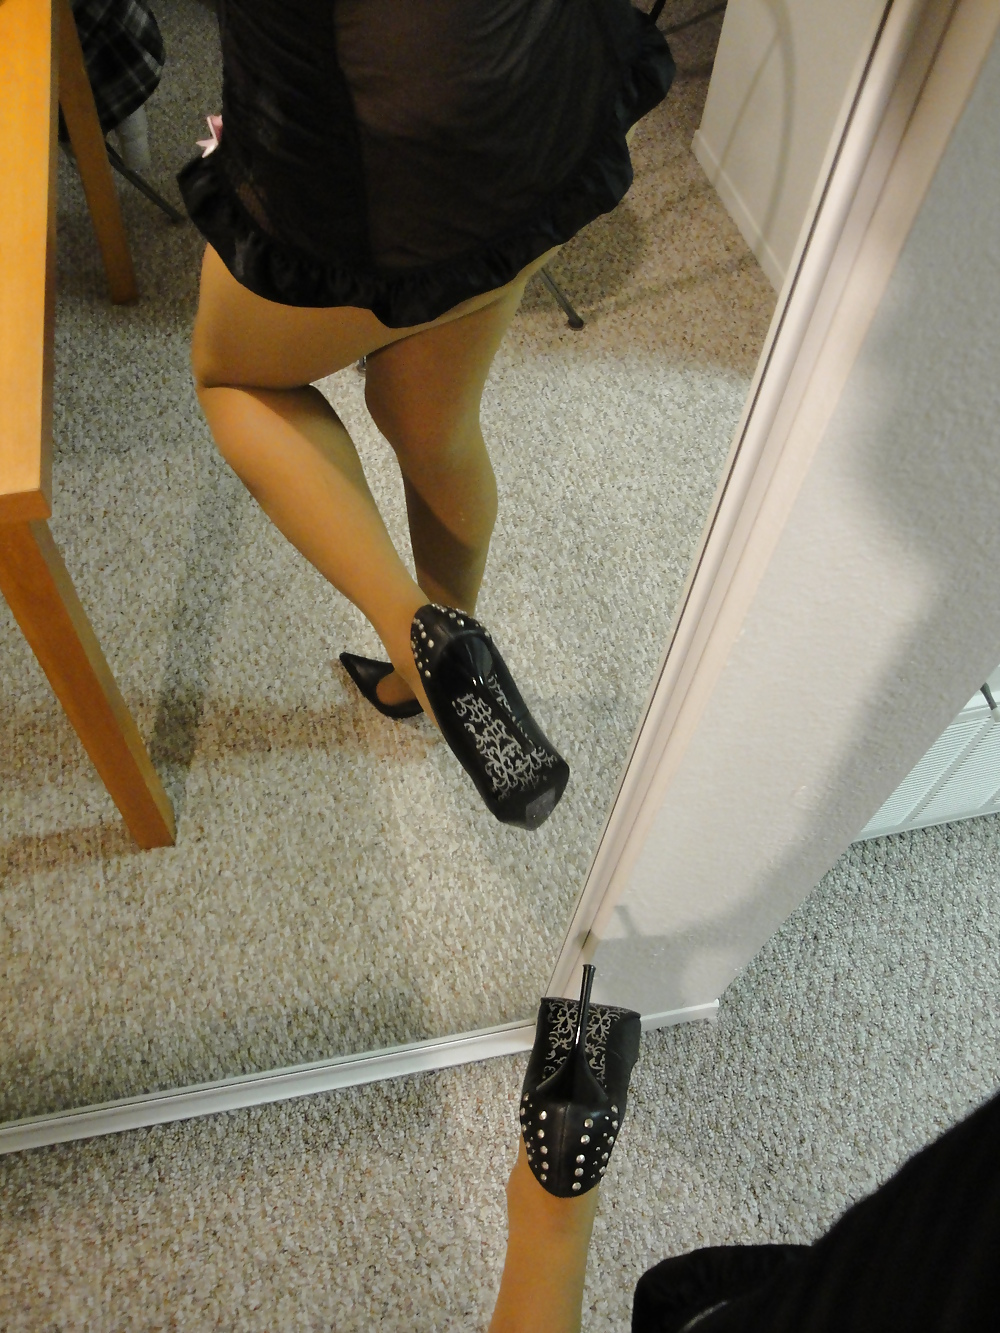 Legs, Pantyhose, and Heels!! #9301341